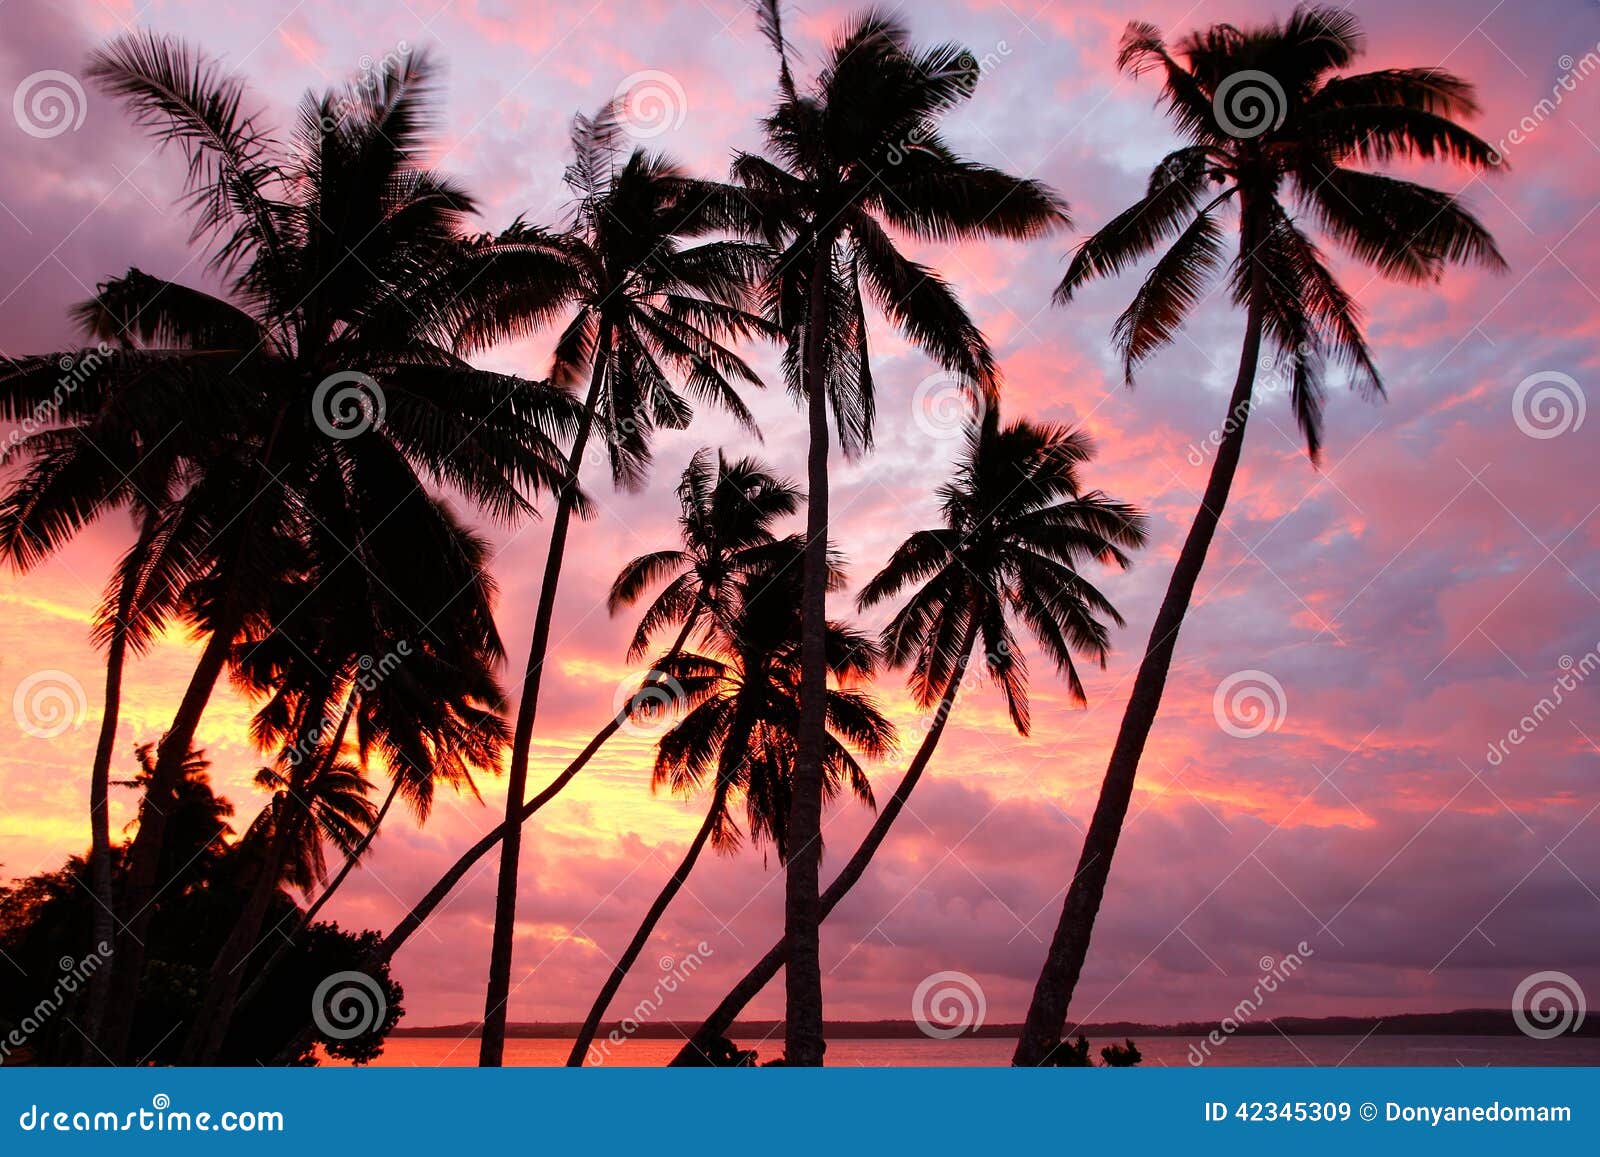 silhouetted palm trees on a beach at sunset, ofu island, tonga